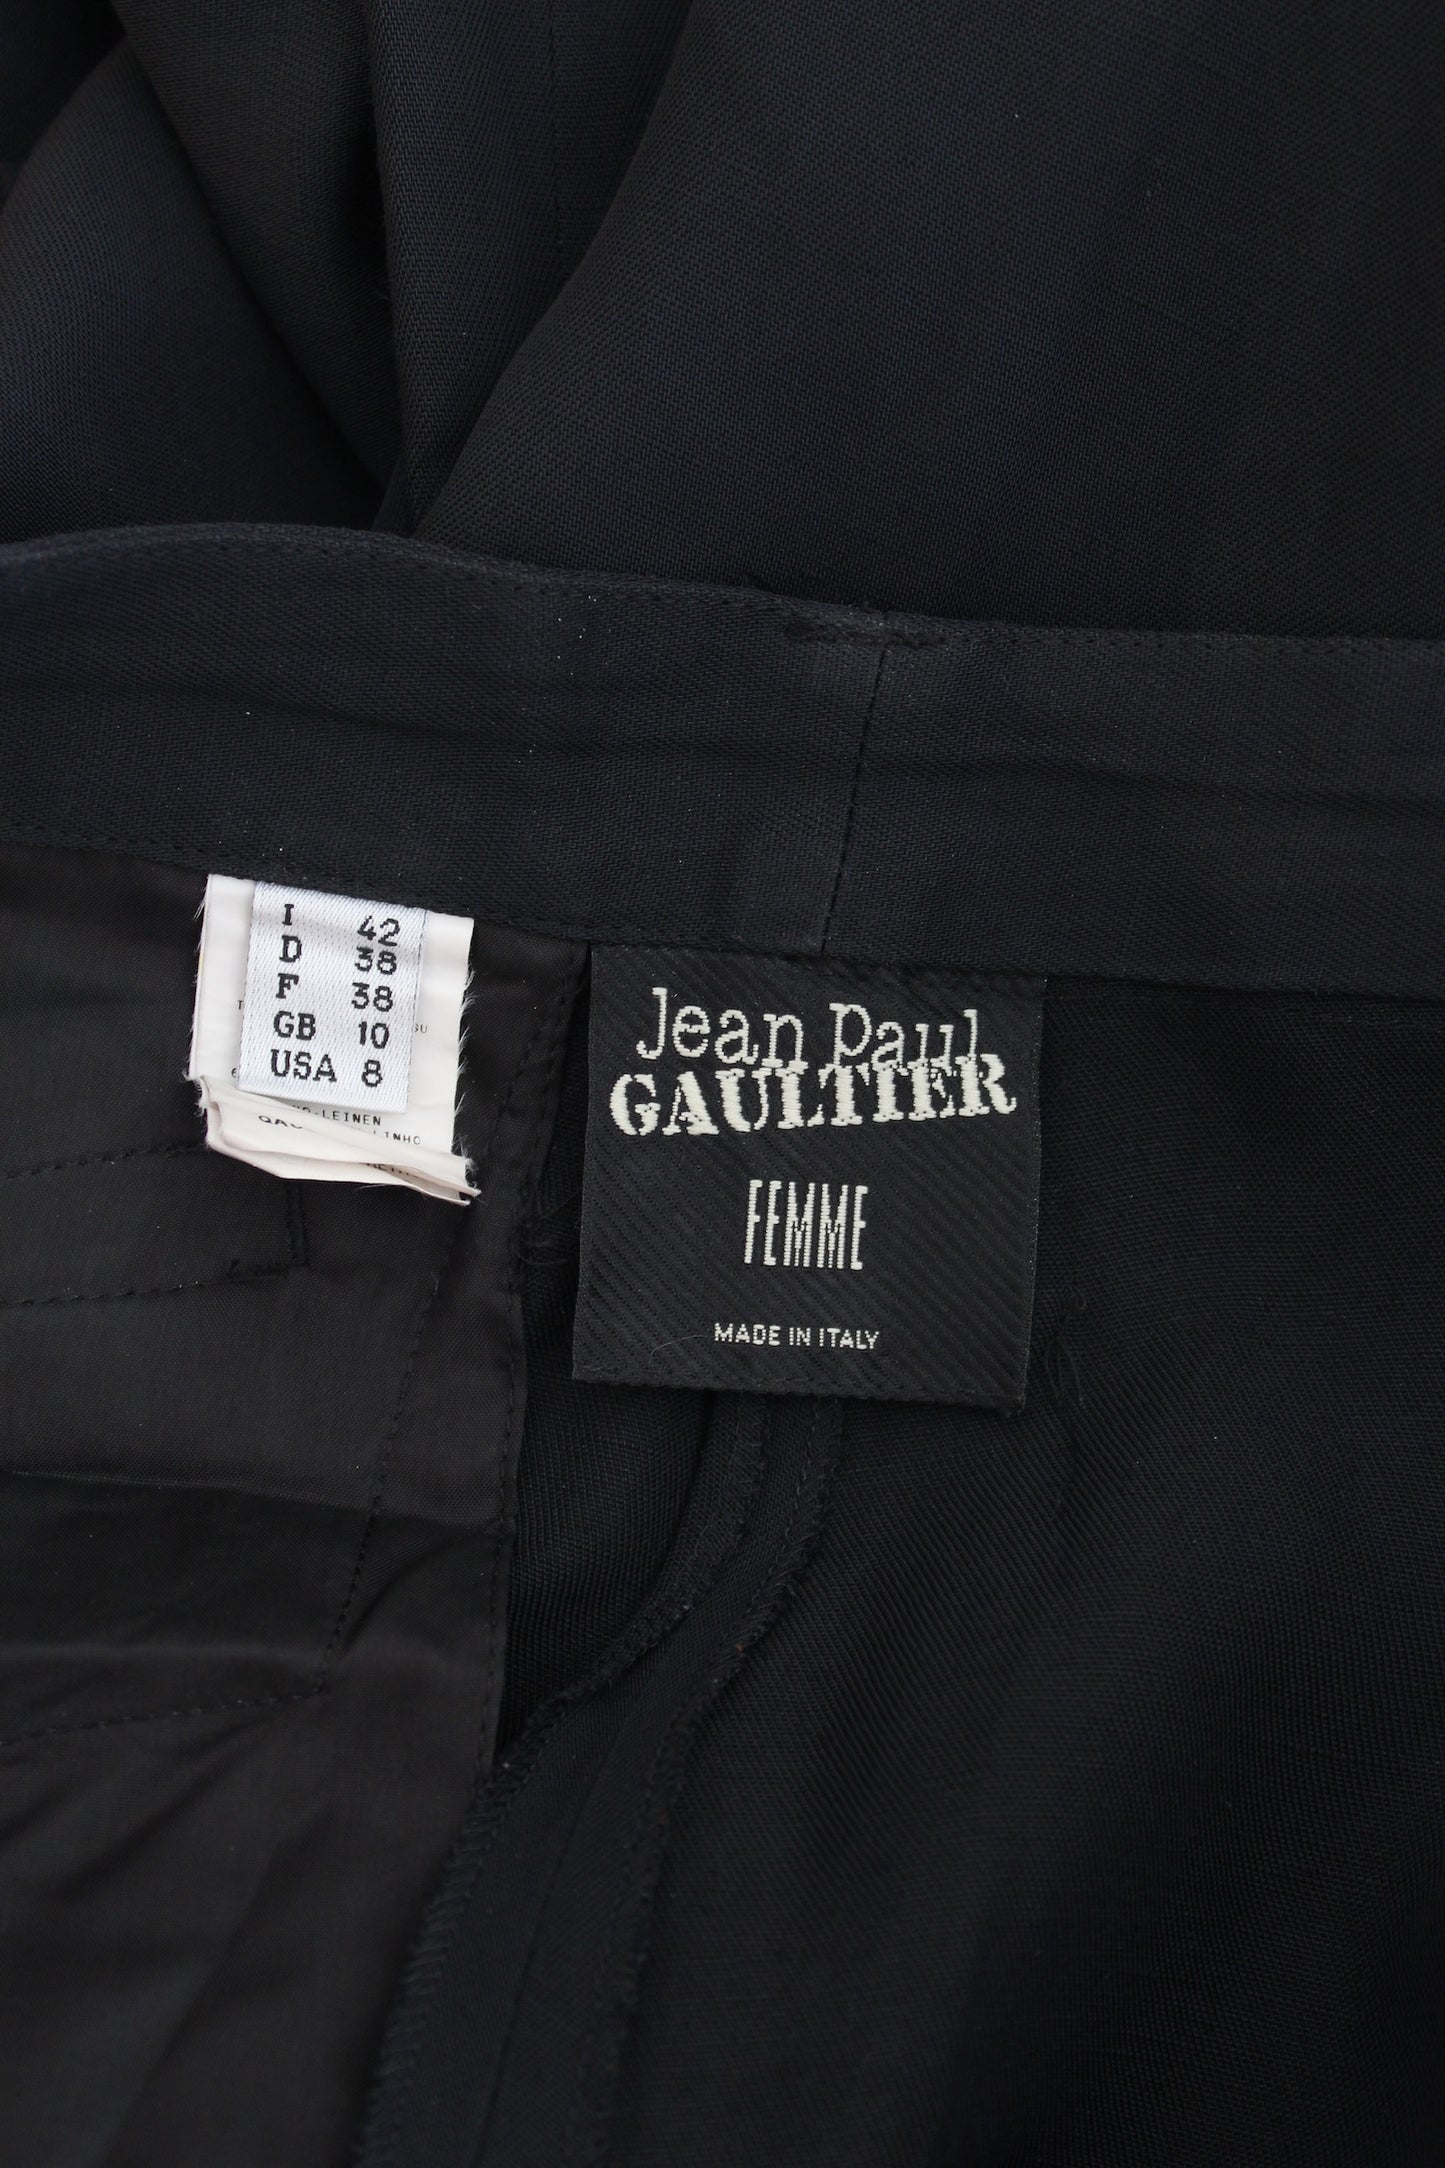 Jean Paul Gaultier Black Palazzo Trousers Vintage 90s